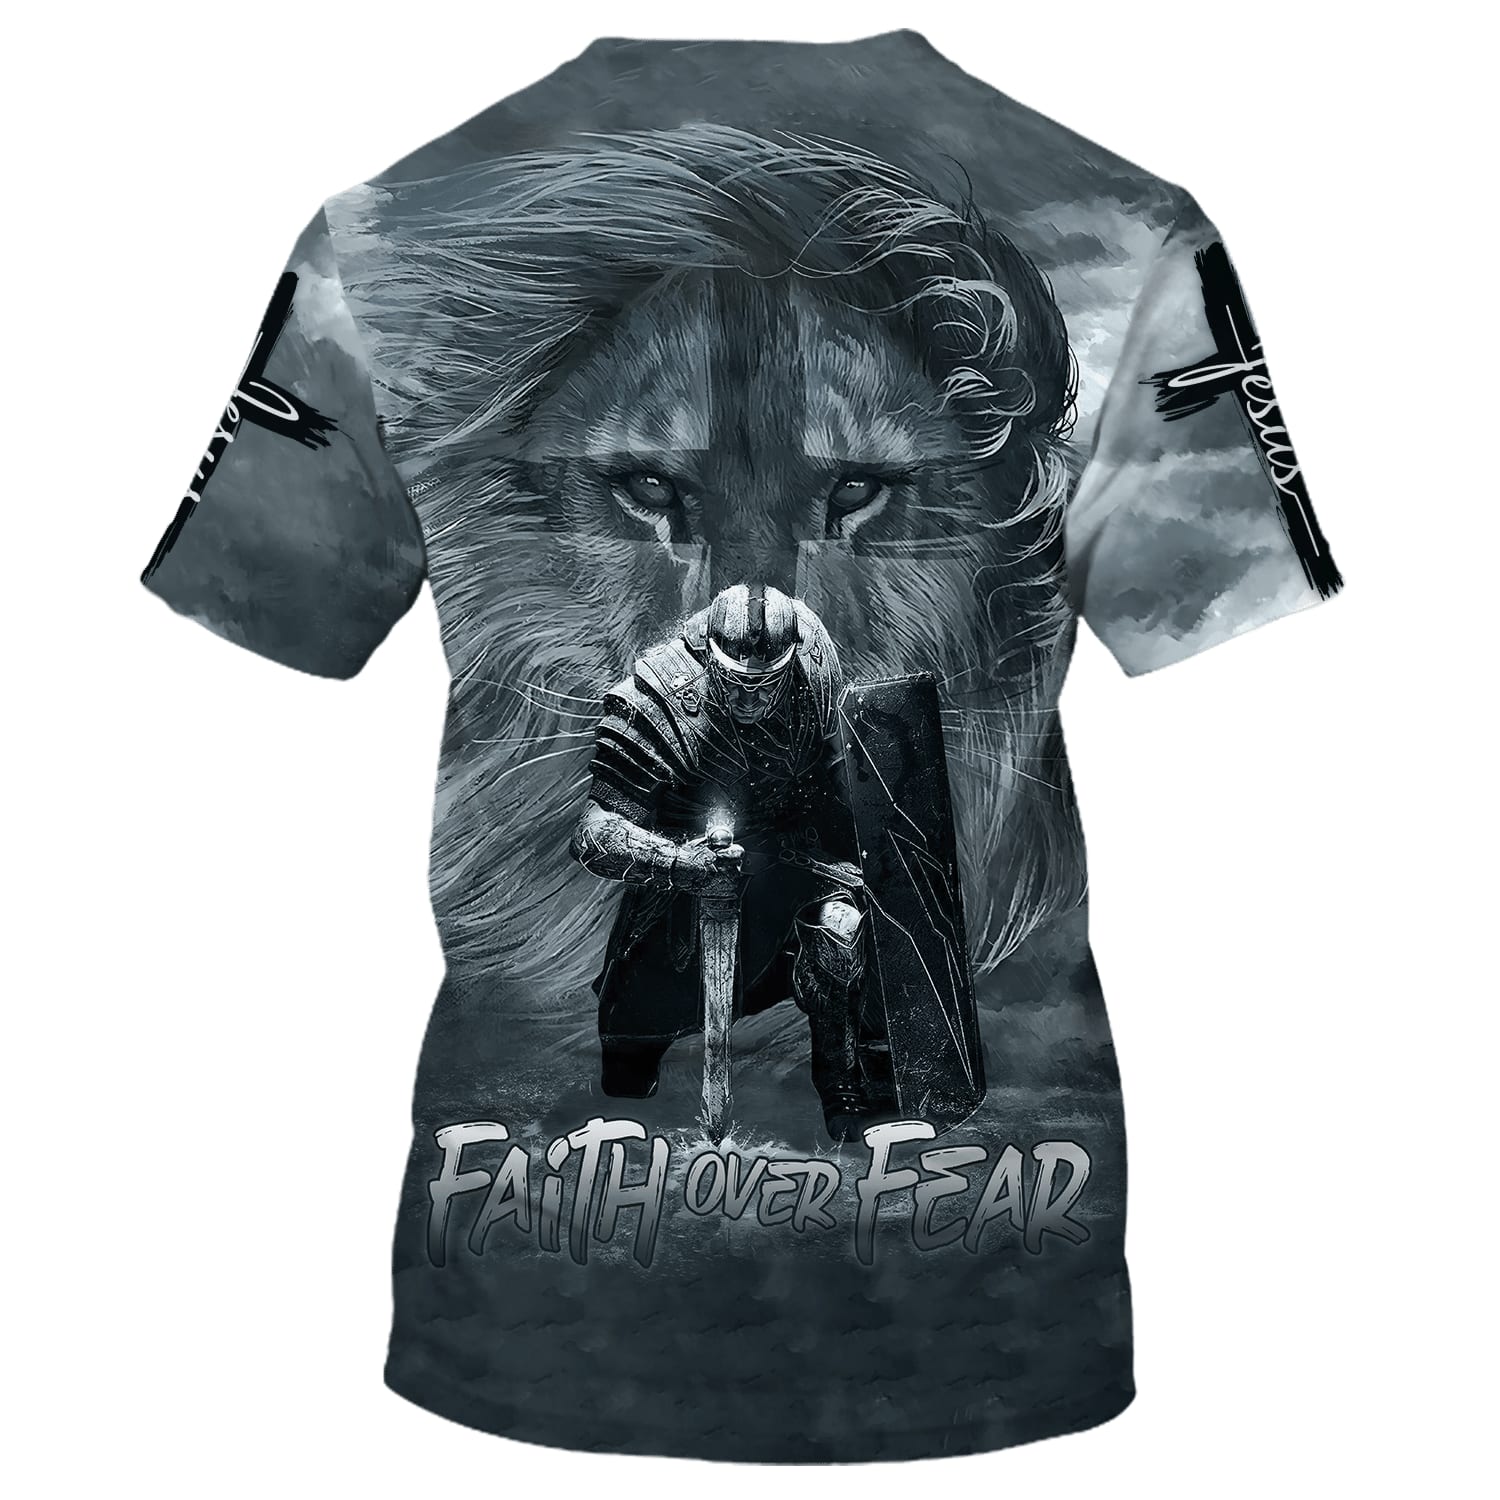 Faith Over Fear Lion Warrior 3d T-Shirts - Christian Shirts For Men&Women